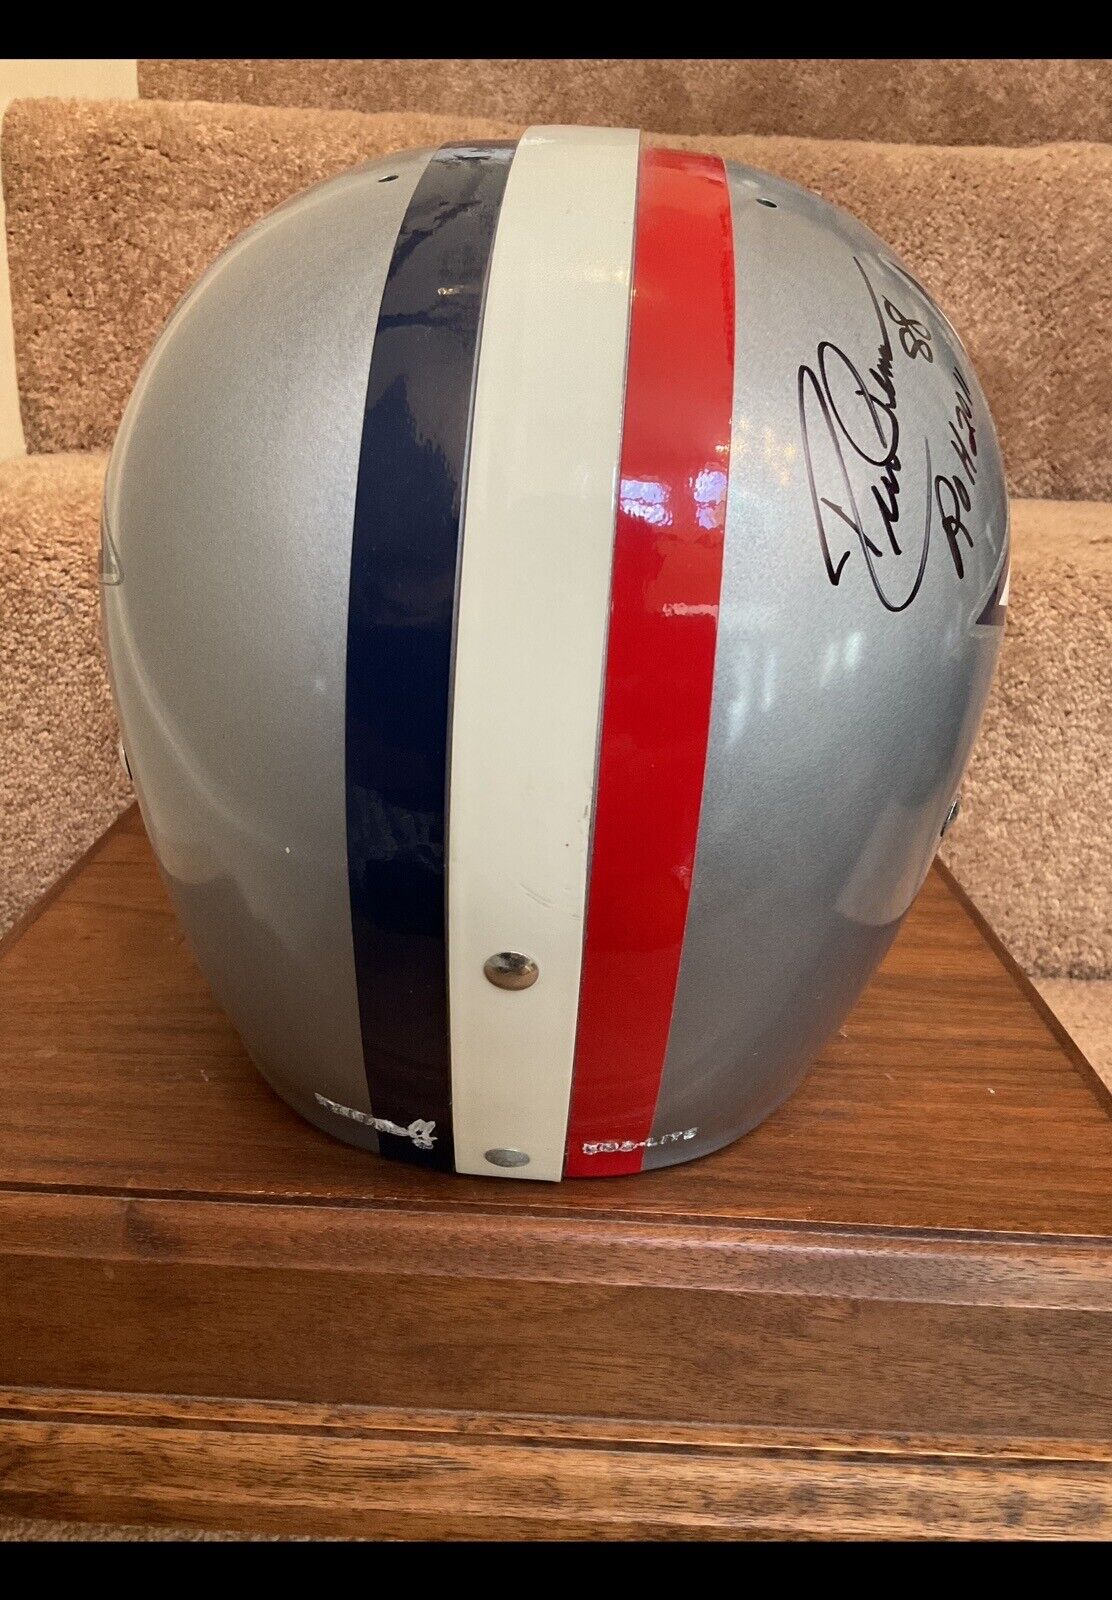 Riddell Kra-Lite Football Helmet-1976 Dallas Cowboys Autographed Renfro Pearson Sports Mem, Cards & Fan Shop:Autographs-Original:Football-NFL:Helmets WESTBROOKSPORTSCARDS   